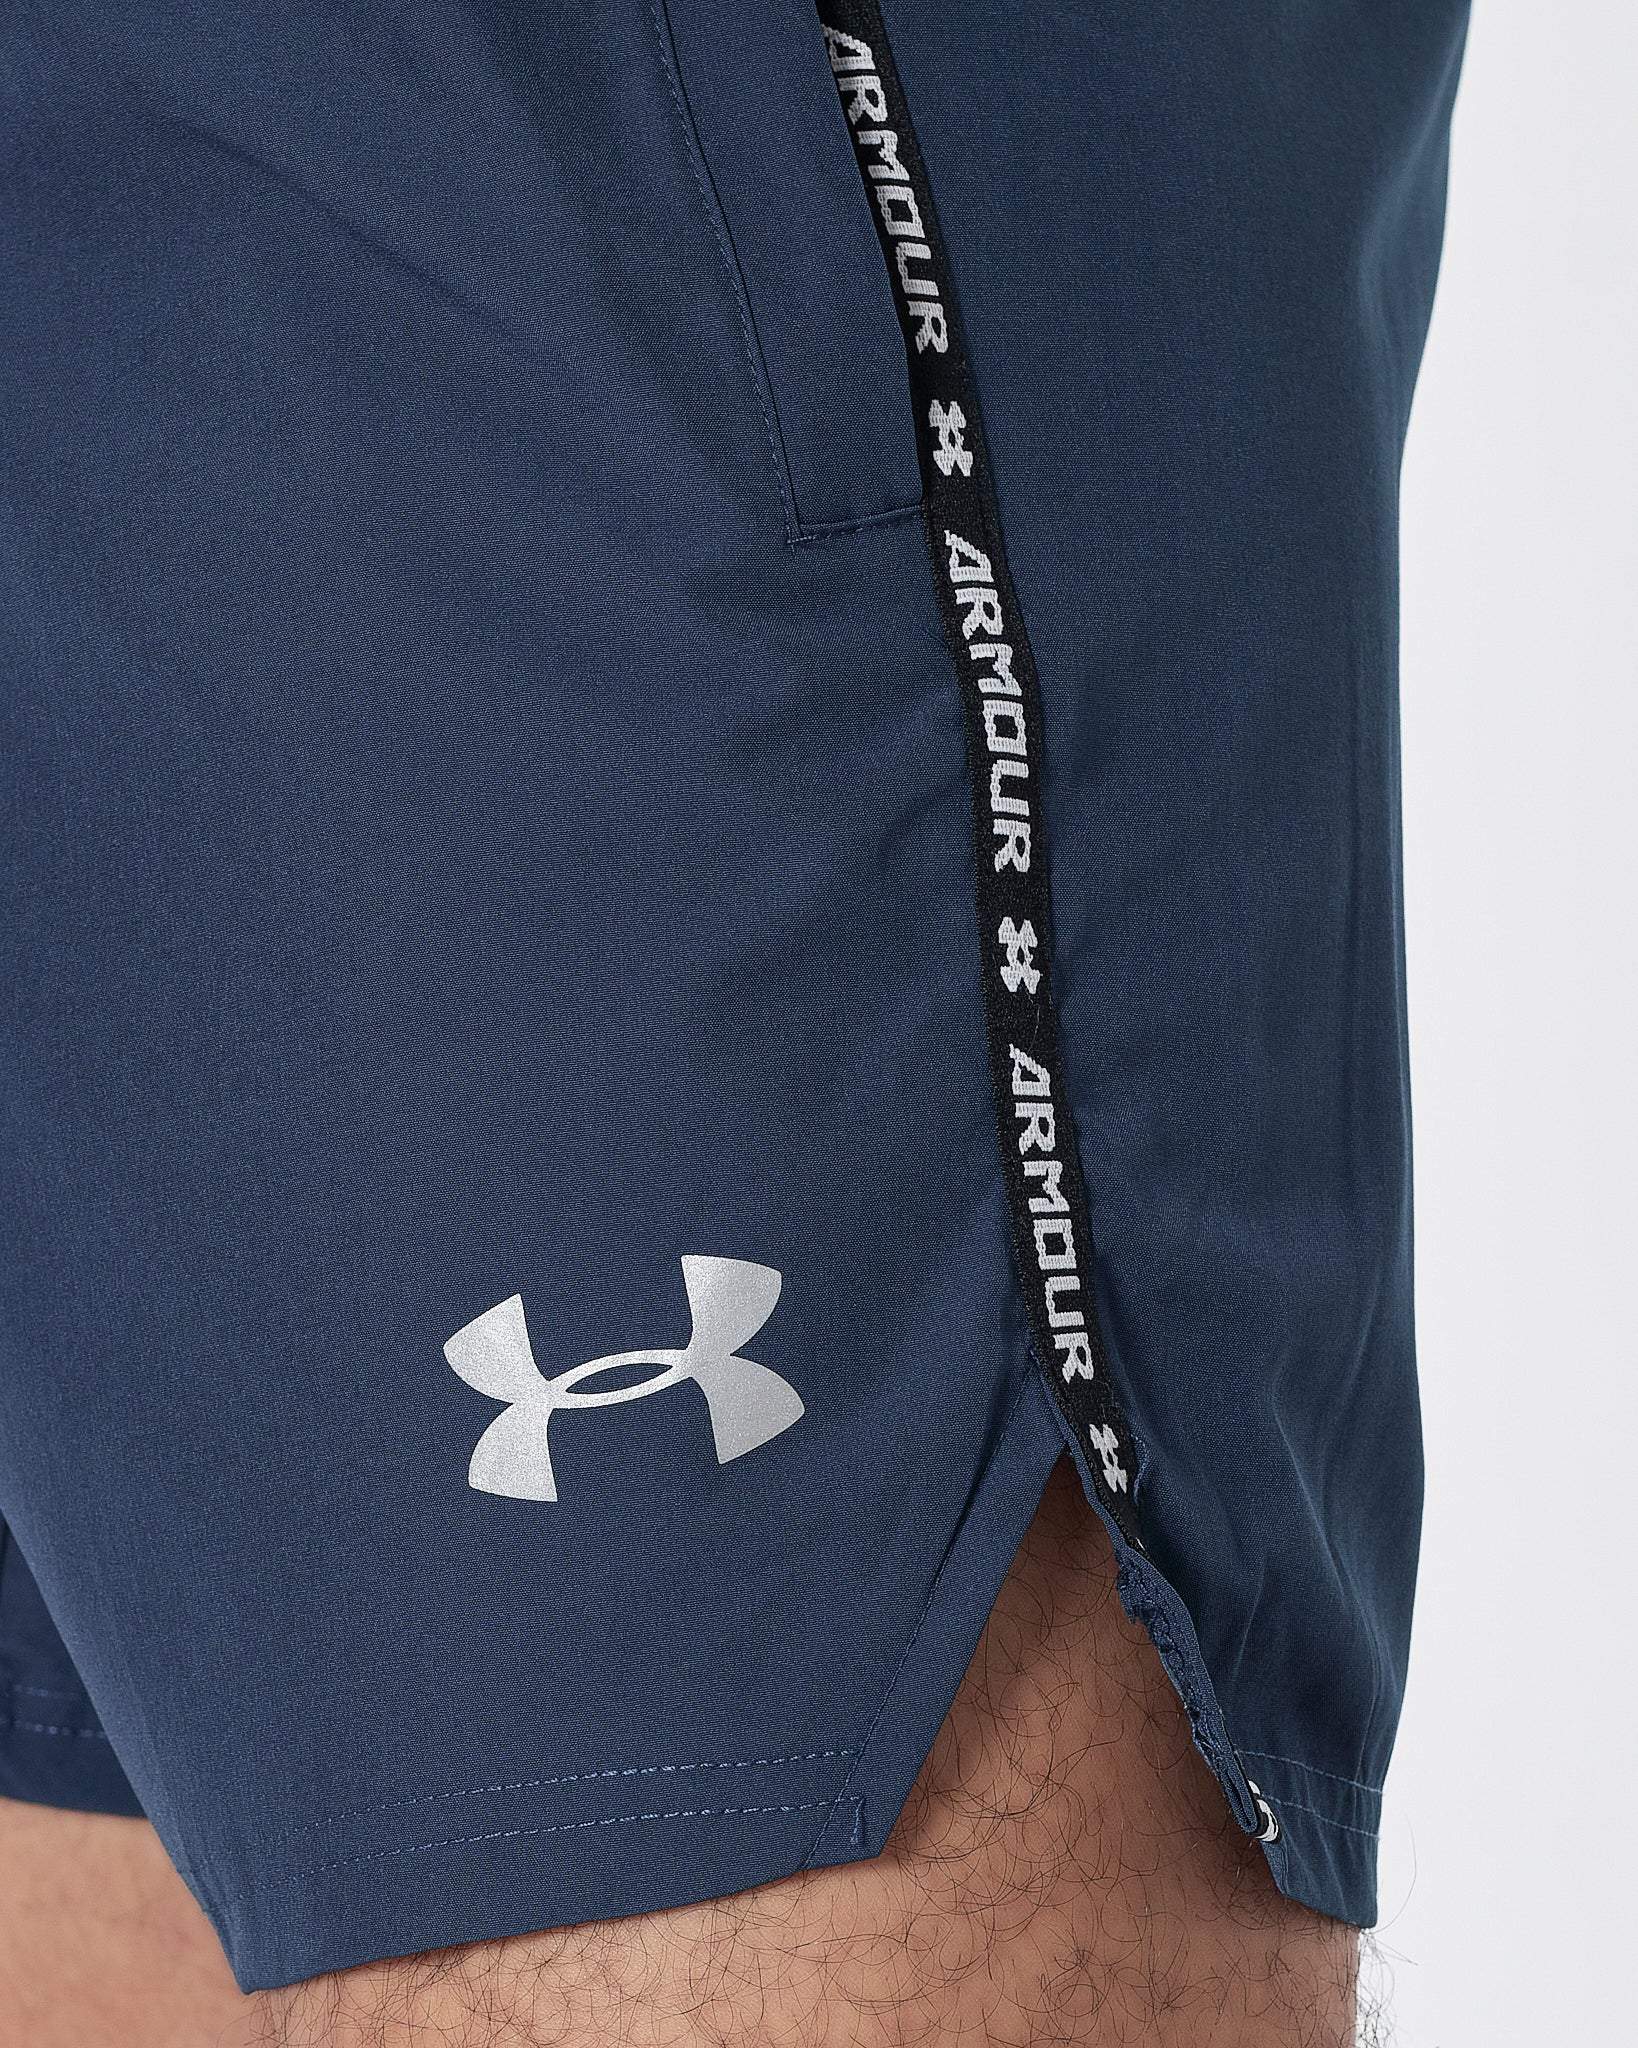 UA Logo Vertical Striped Men Blue Track Shorts 12.90